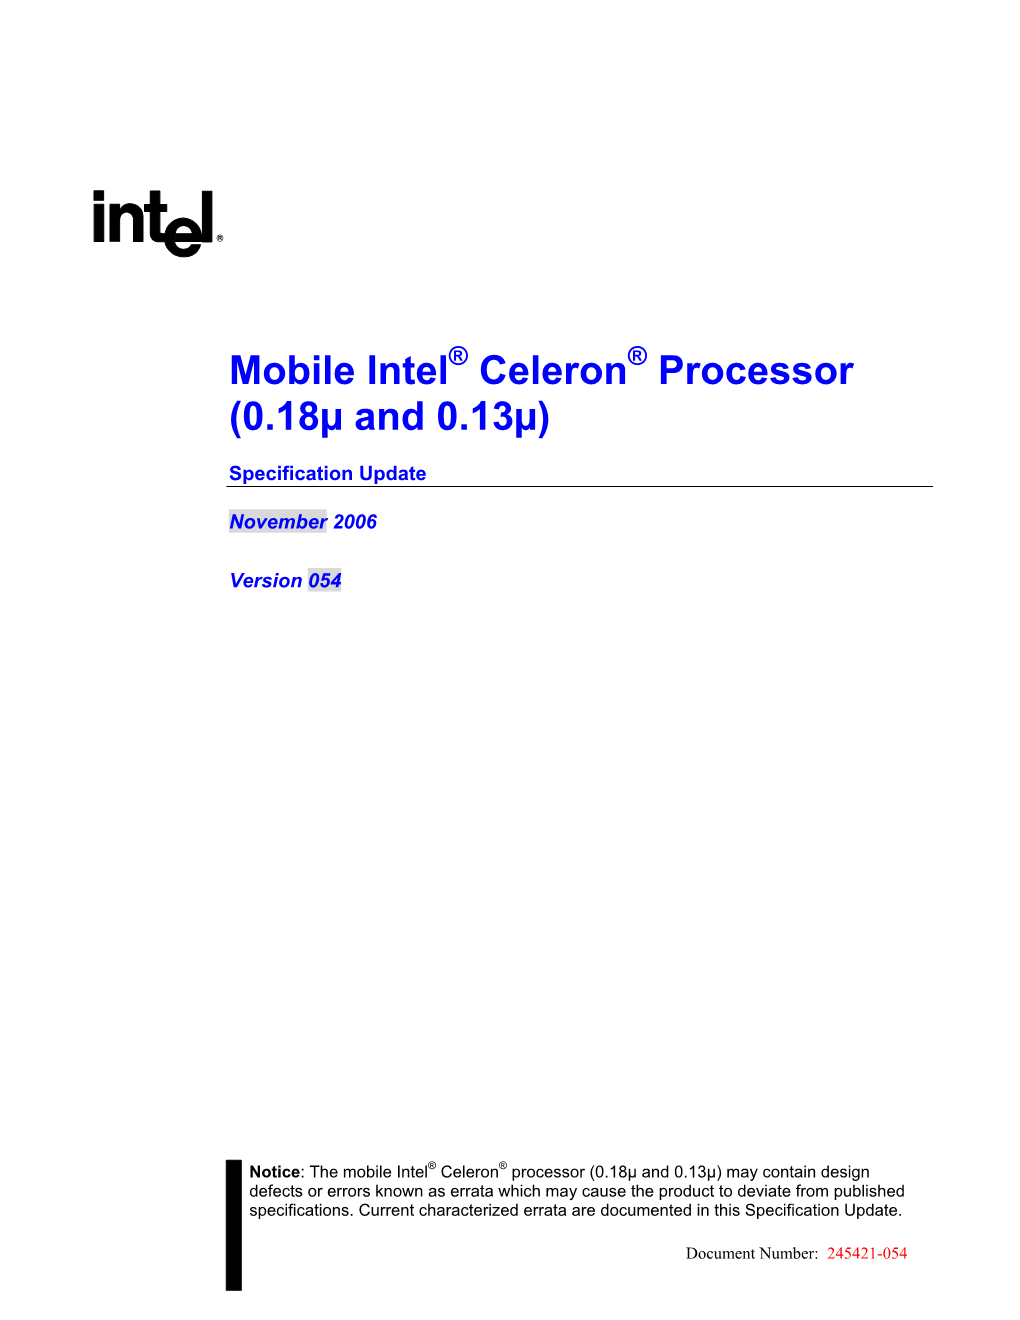 Mobile Intel Celeron Processor (0.18Μ and 0.13Μ)